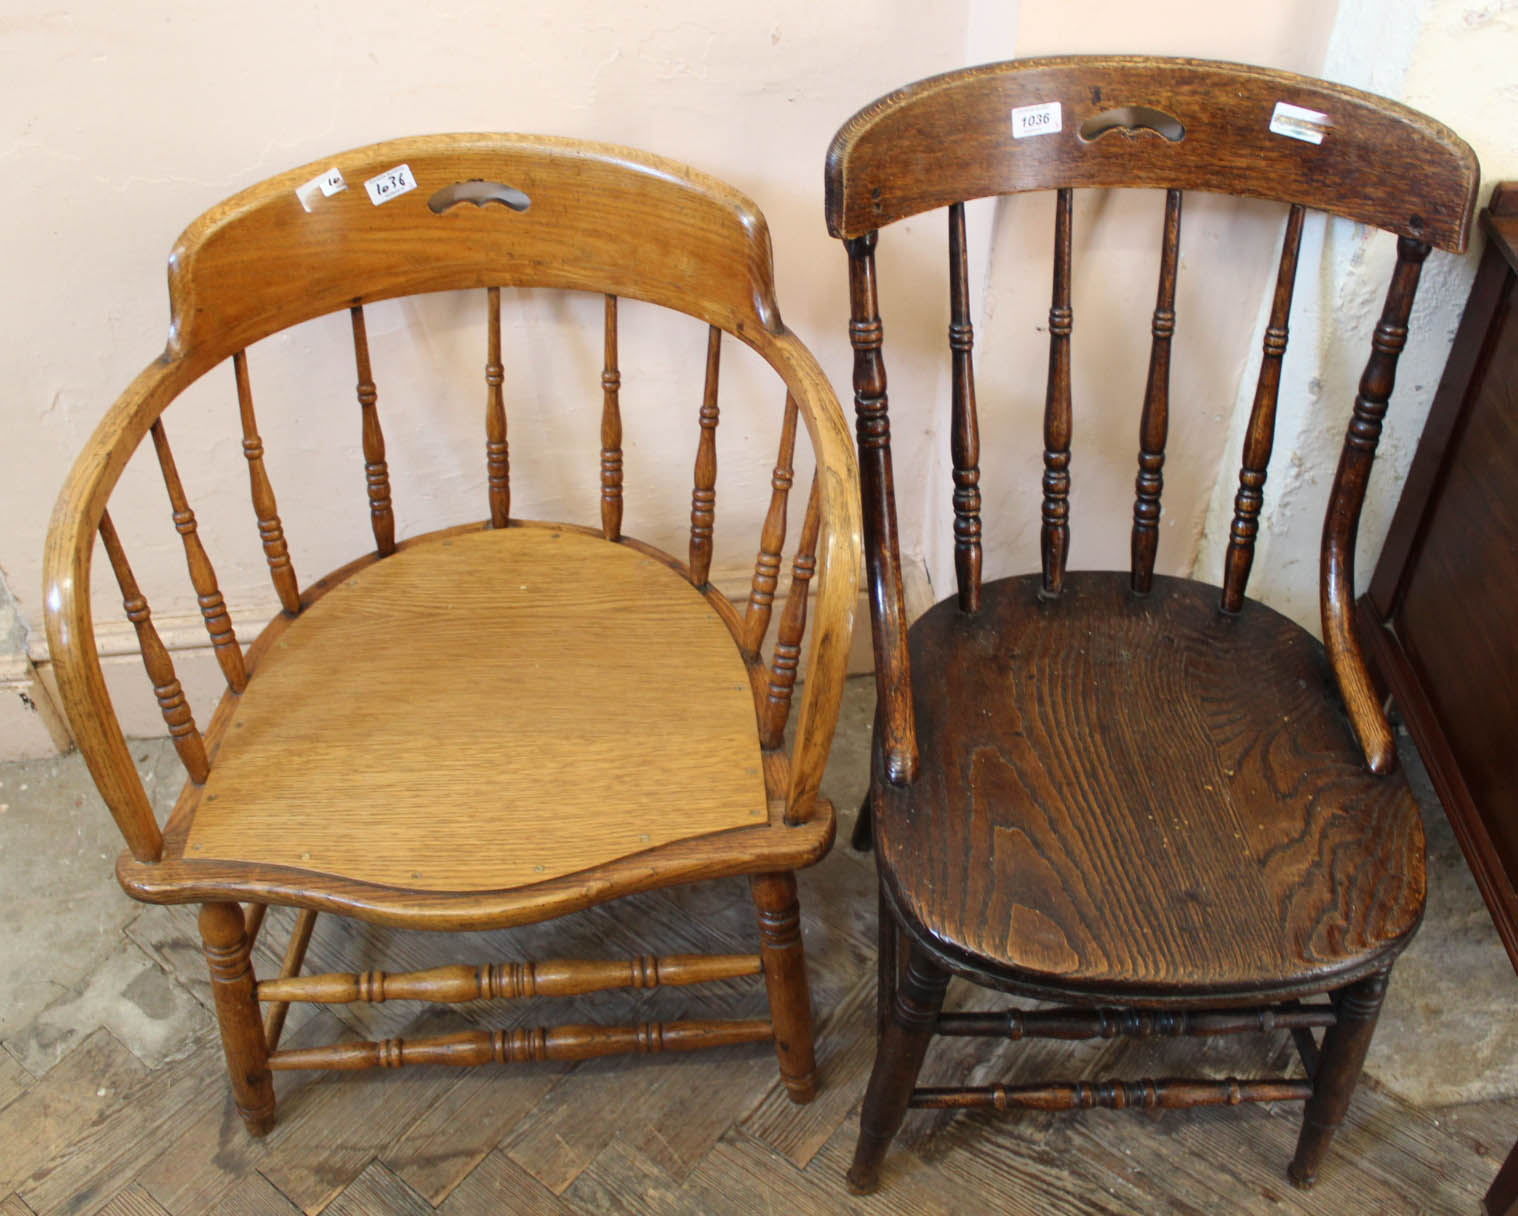 Two Edwardian oak chairs